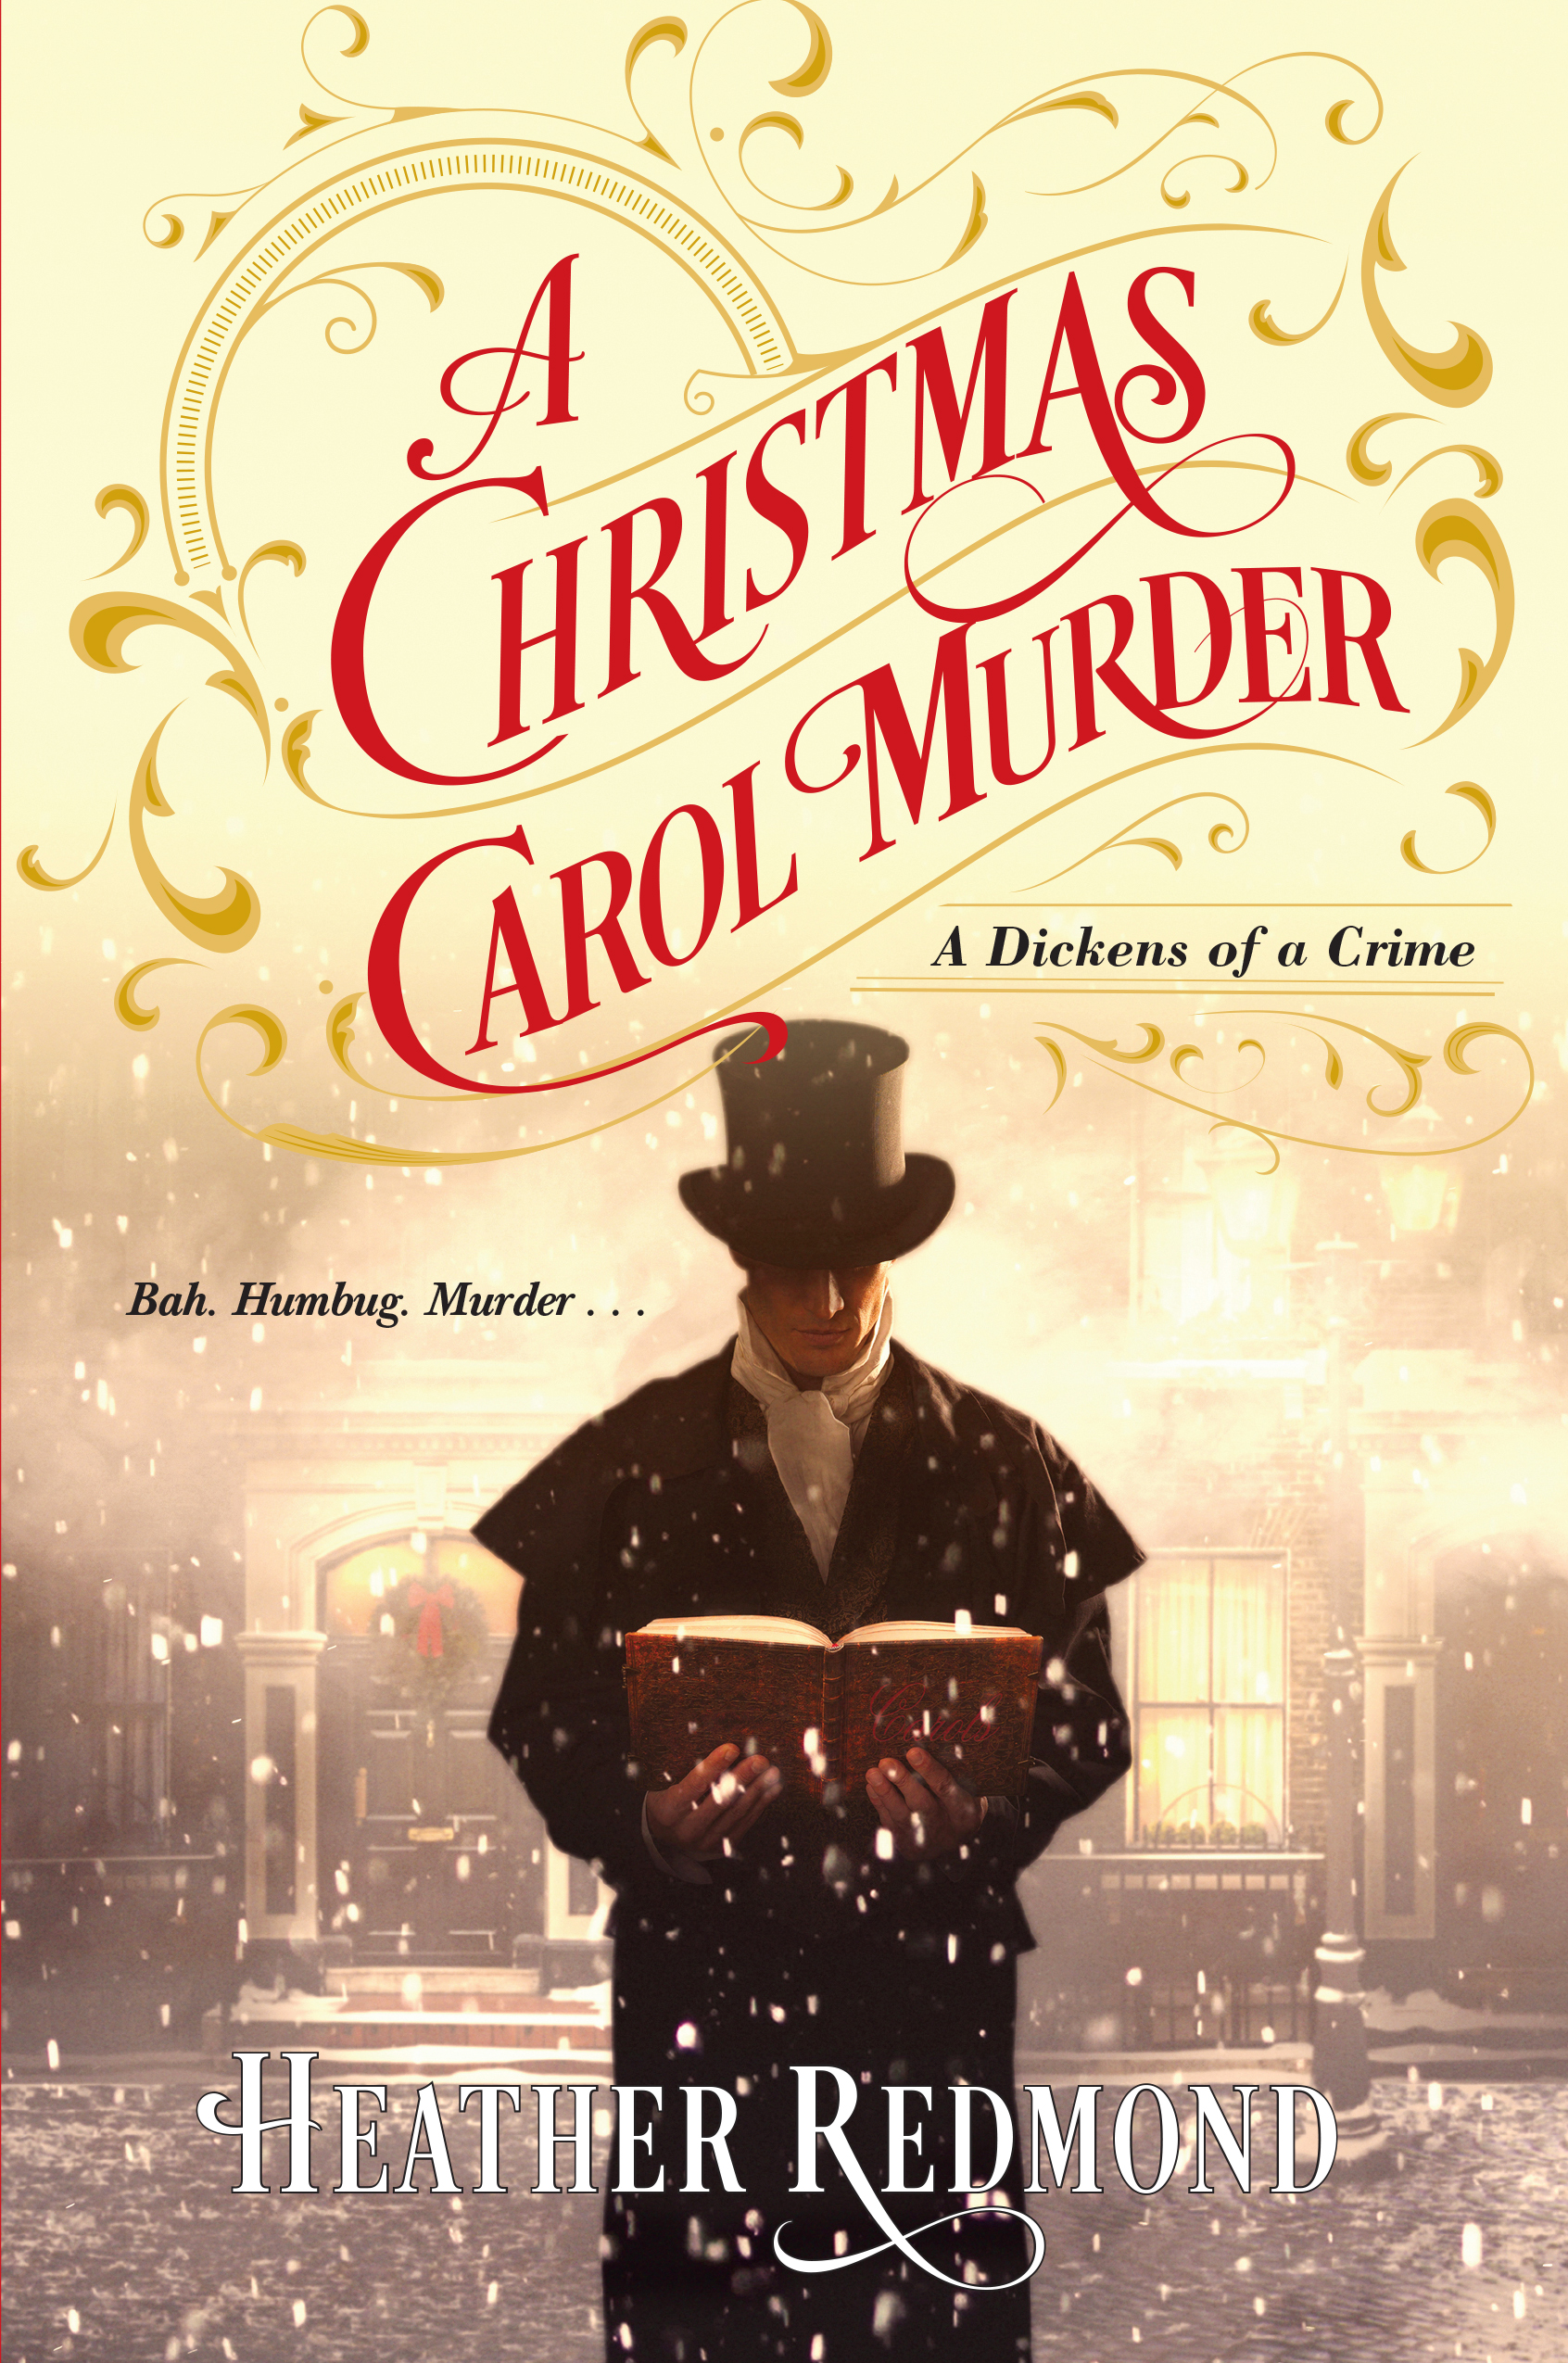 A Christmas Carol Murder by Heather Redmond